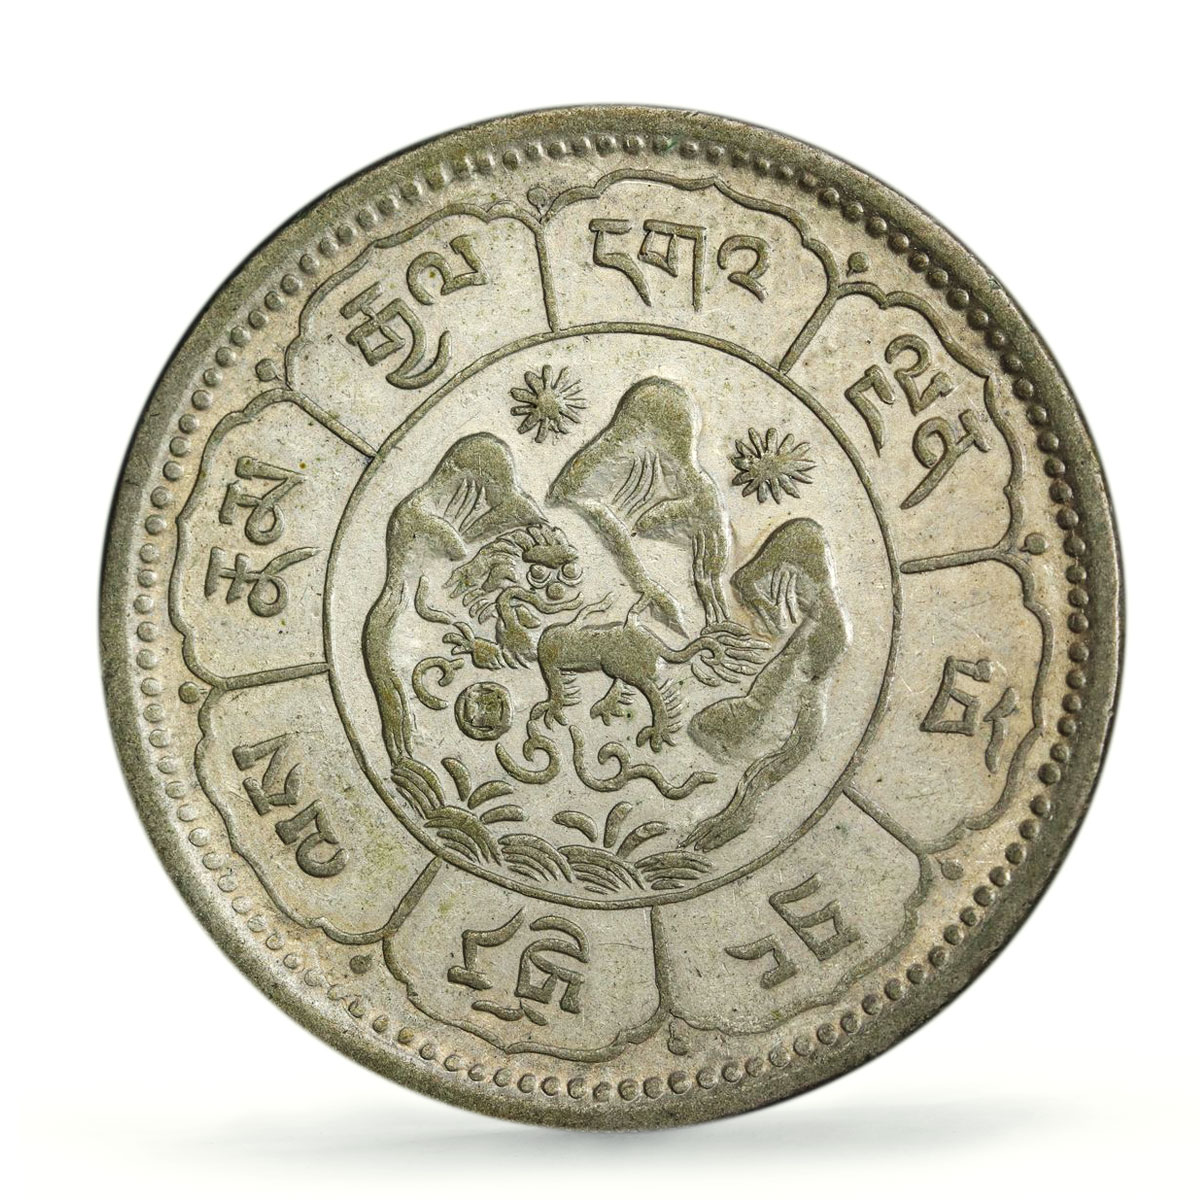 China Tibet 10 srang Regular Coinage Two Suns Y-29 AU50 PCGS billon coin 1948